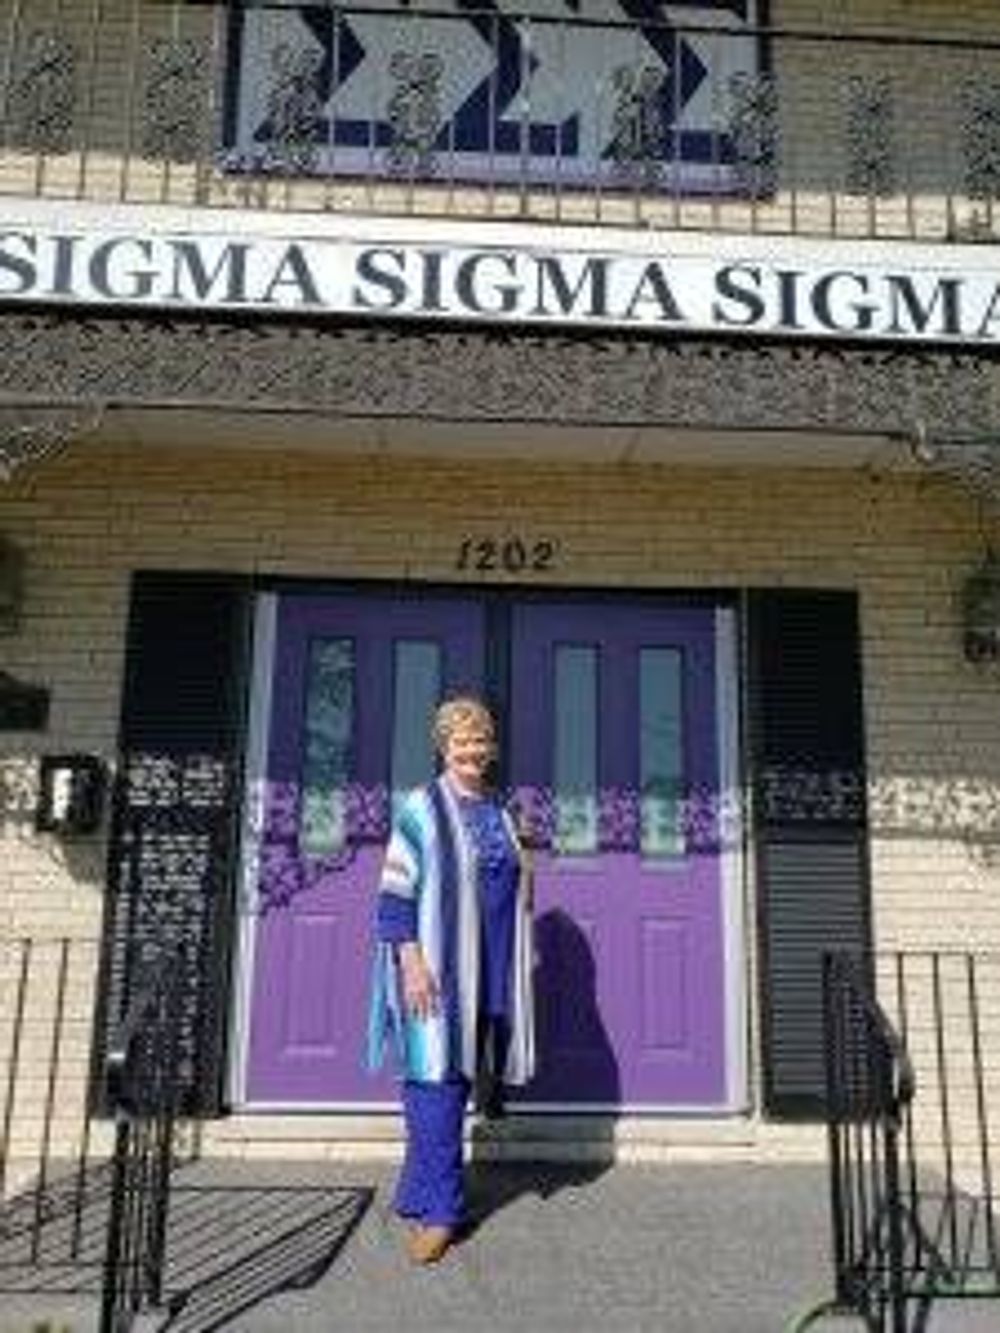 Mariana Williams, House Director, Sigma Sigma Sigma Sorority at Northern Illinois University in DeKalb, Illinois preparing to welcome back students.